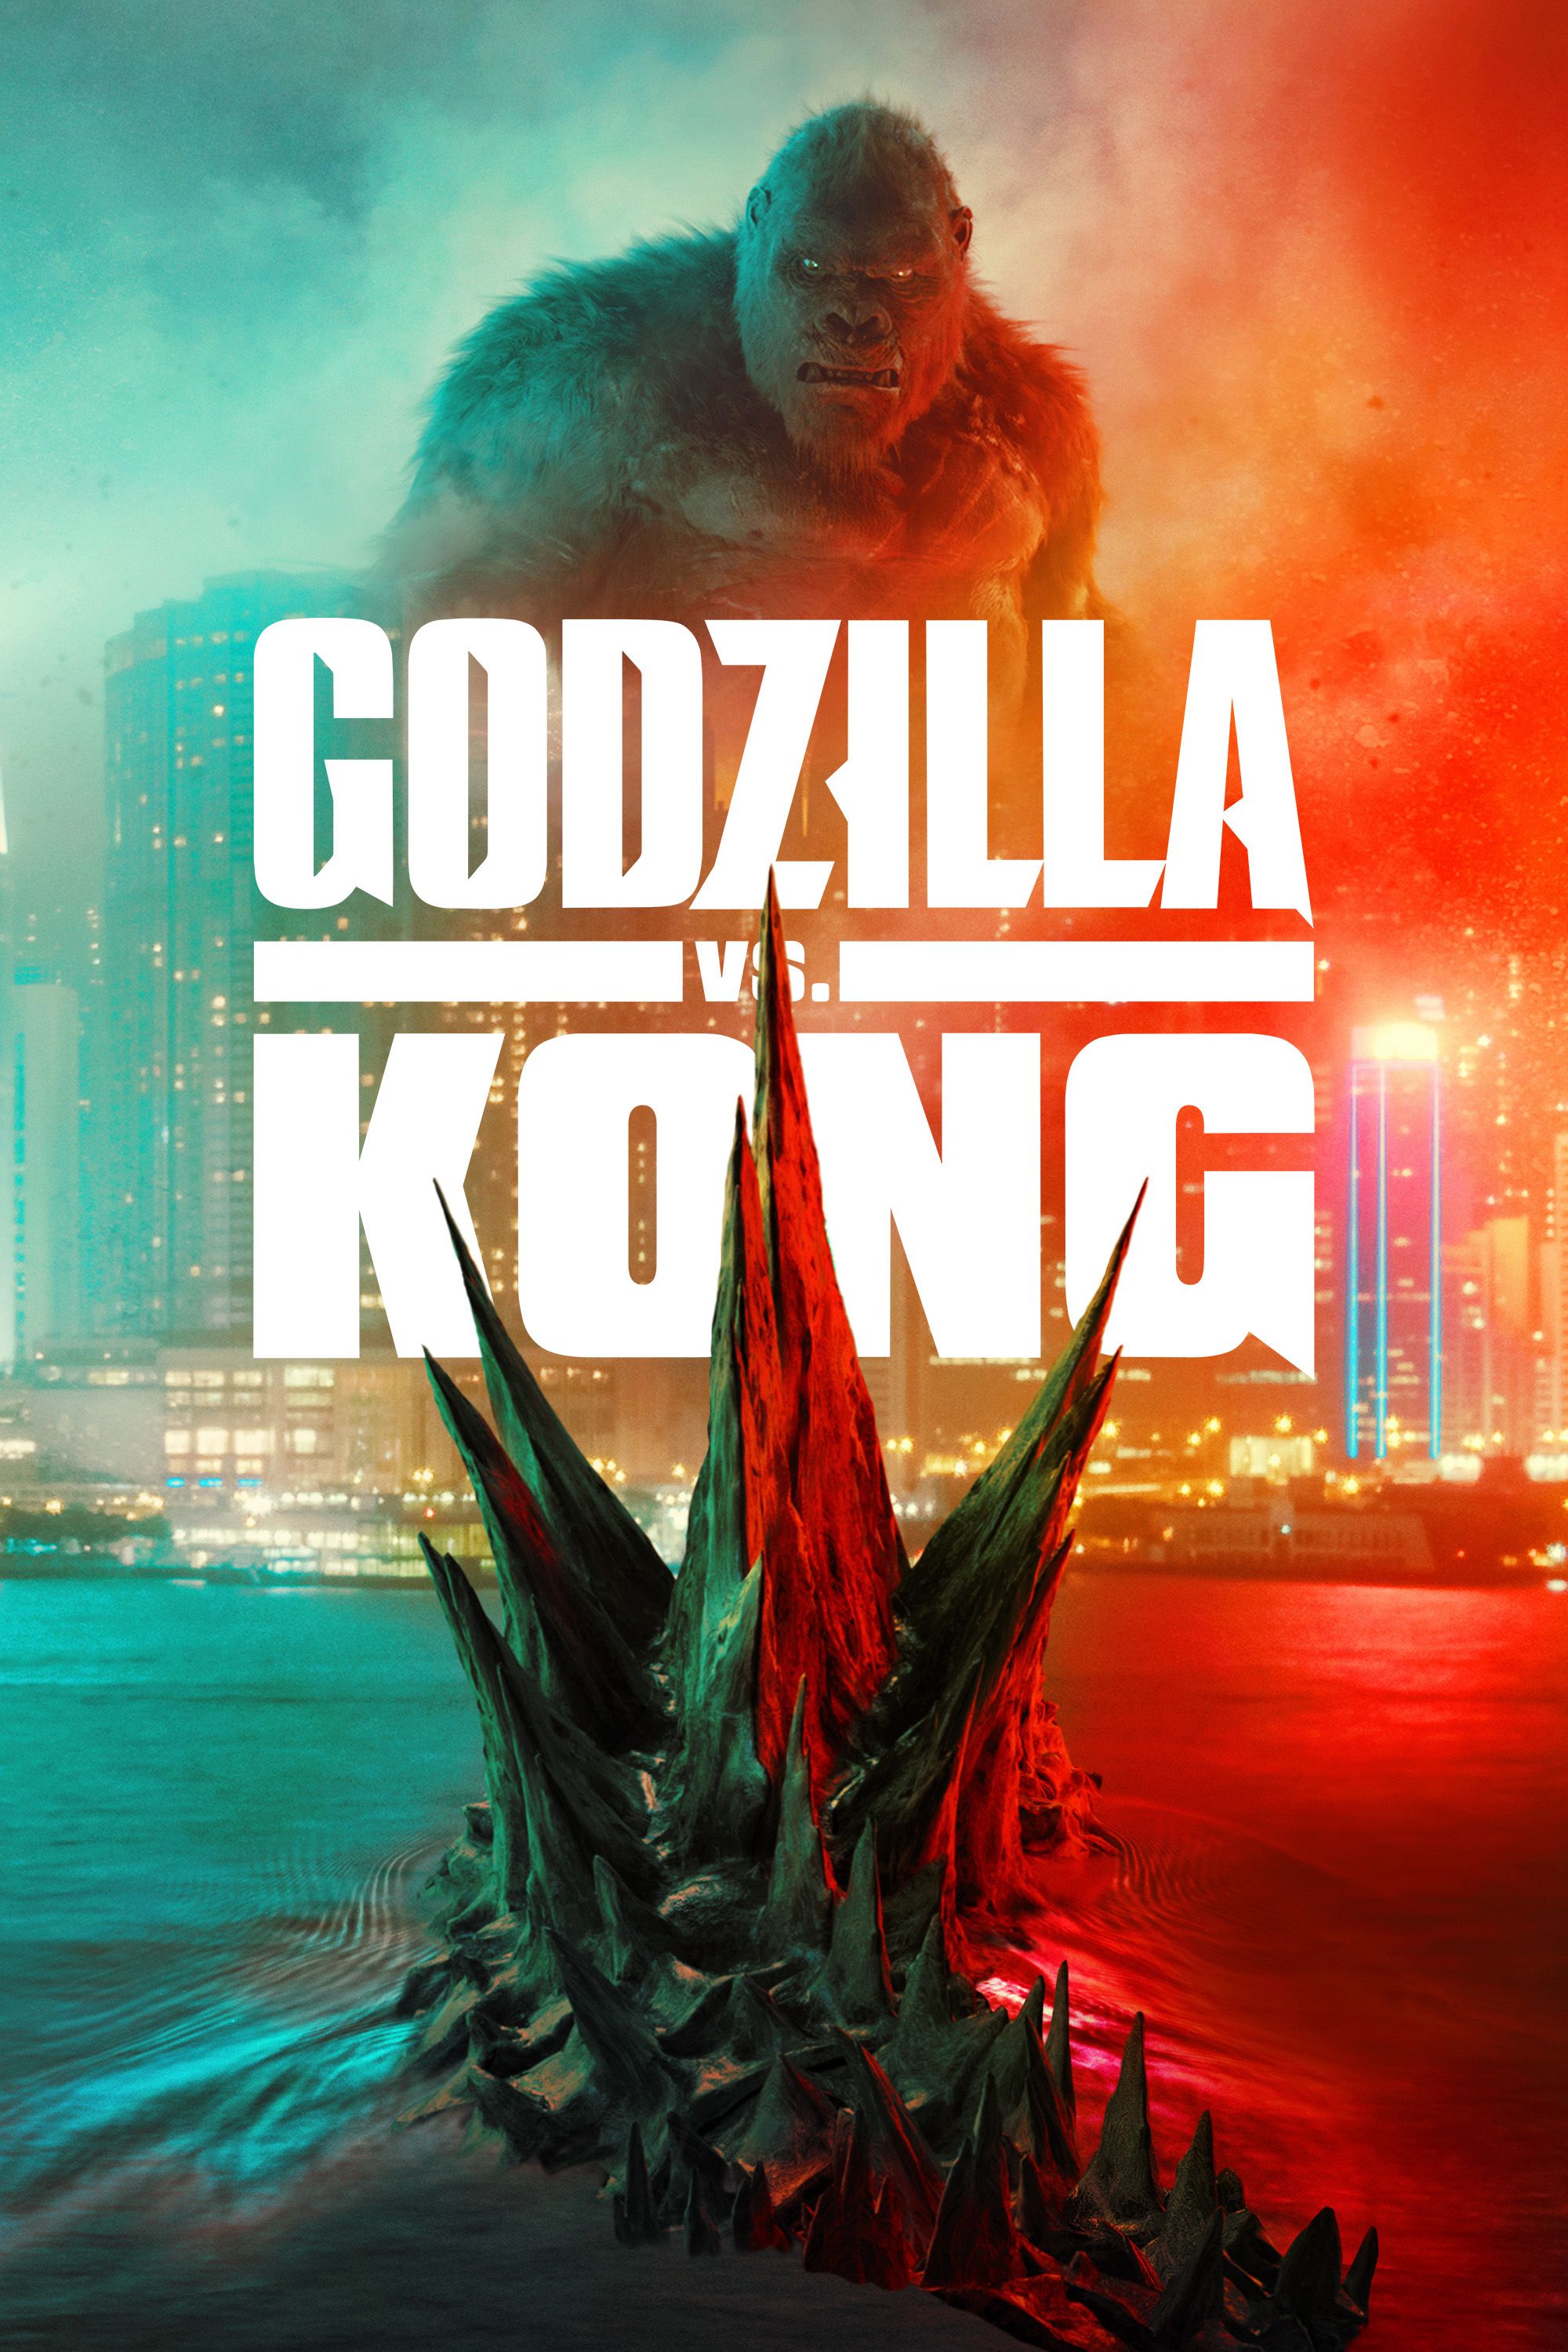 godzilla vs kong full movie online for free